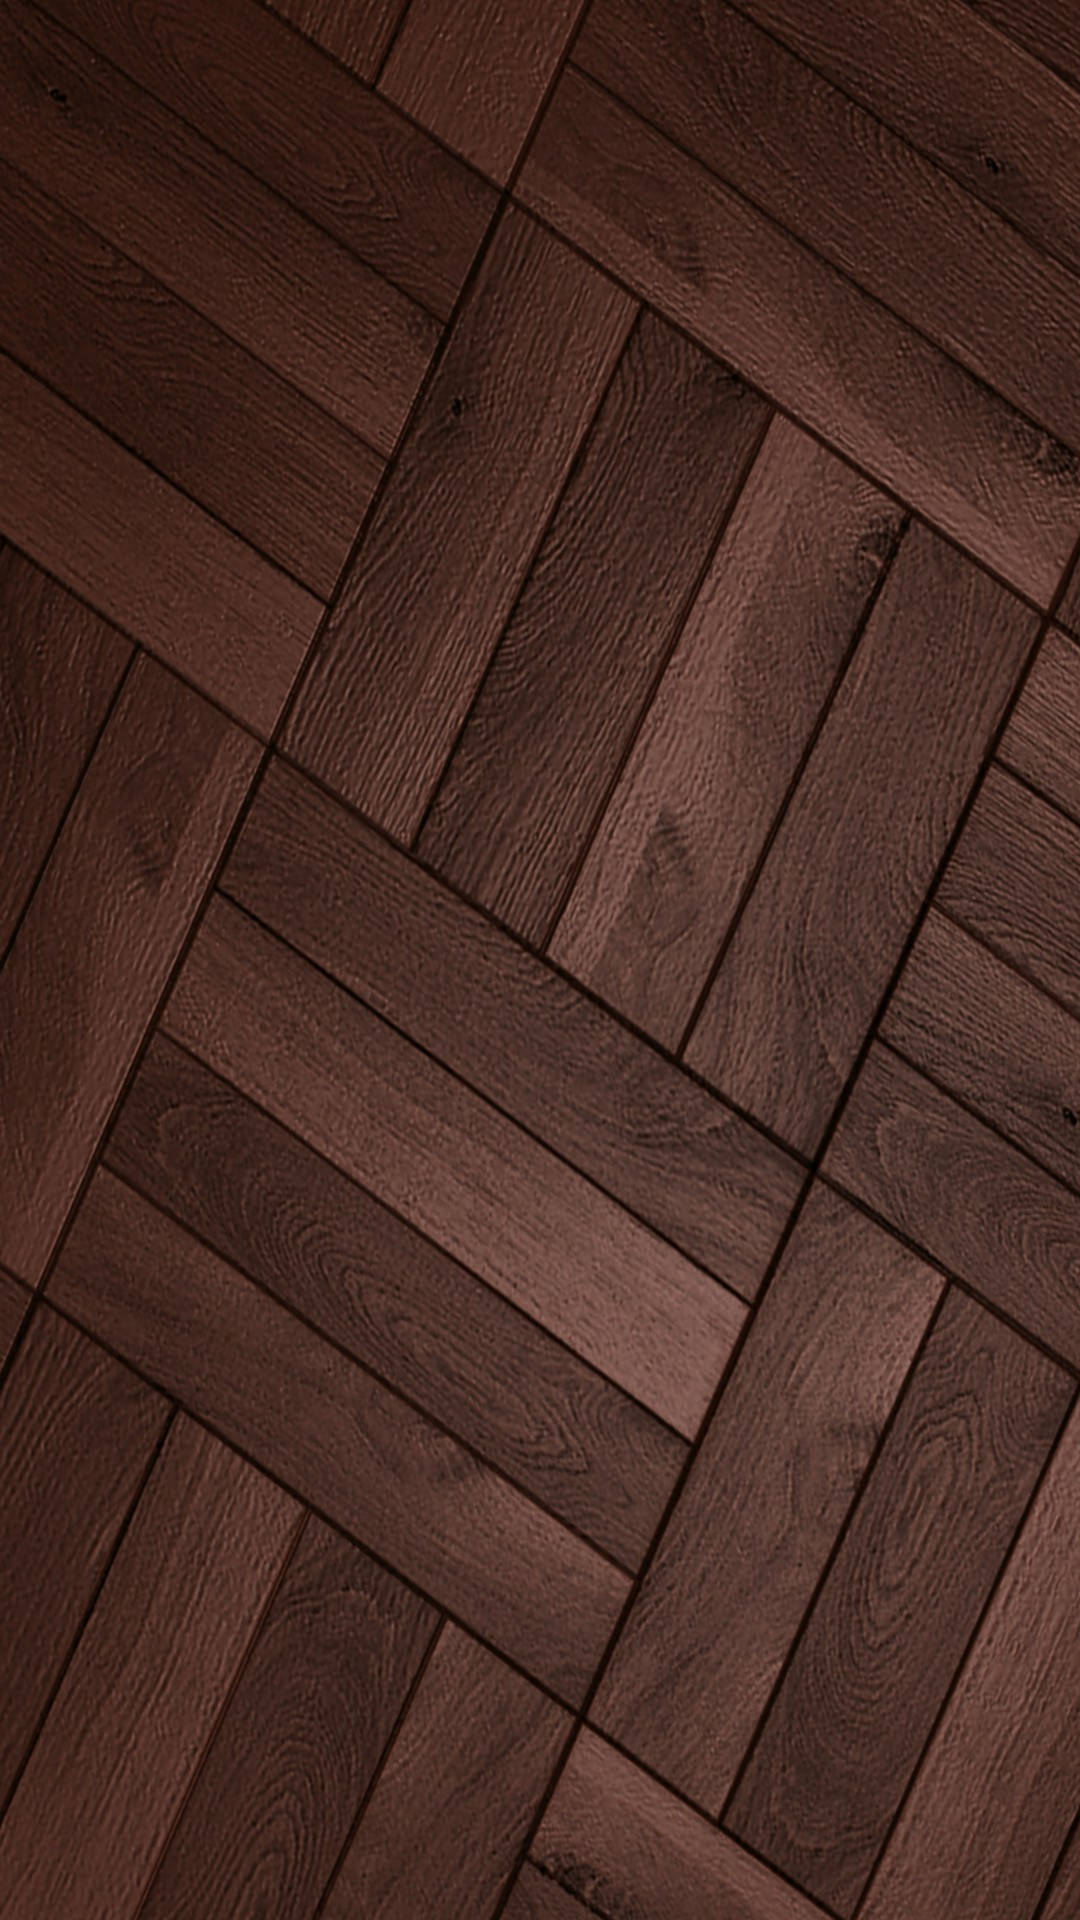 Wooden Floorboards Samsung Galaxy S4 Wallpaper